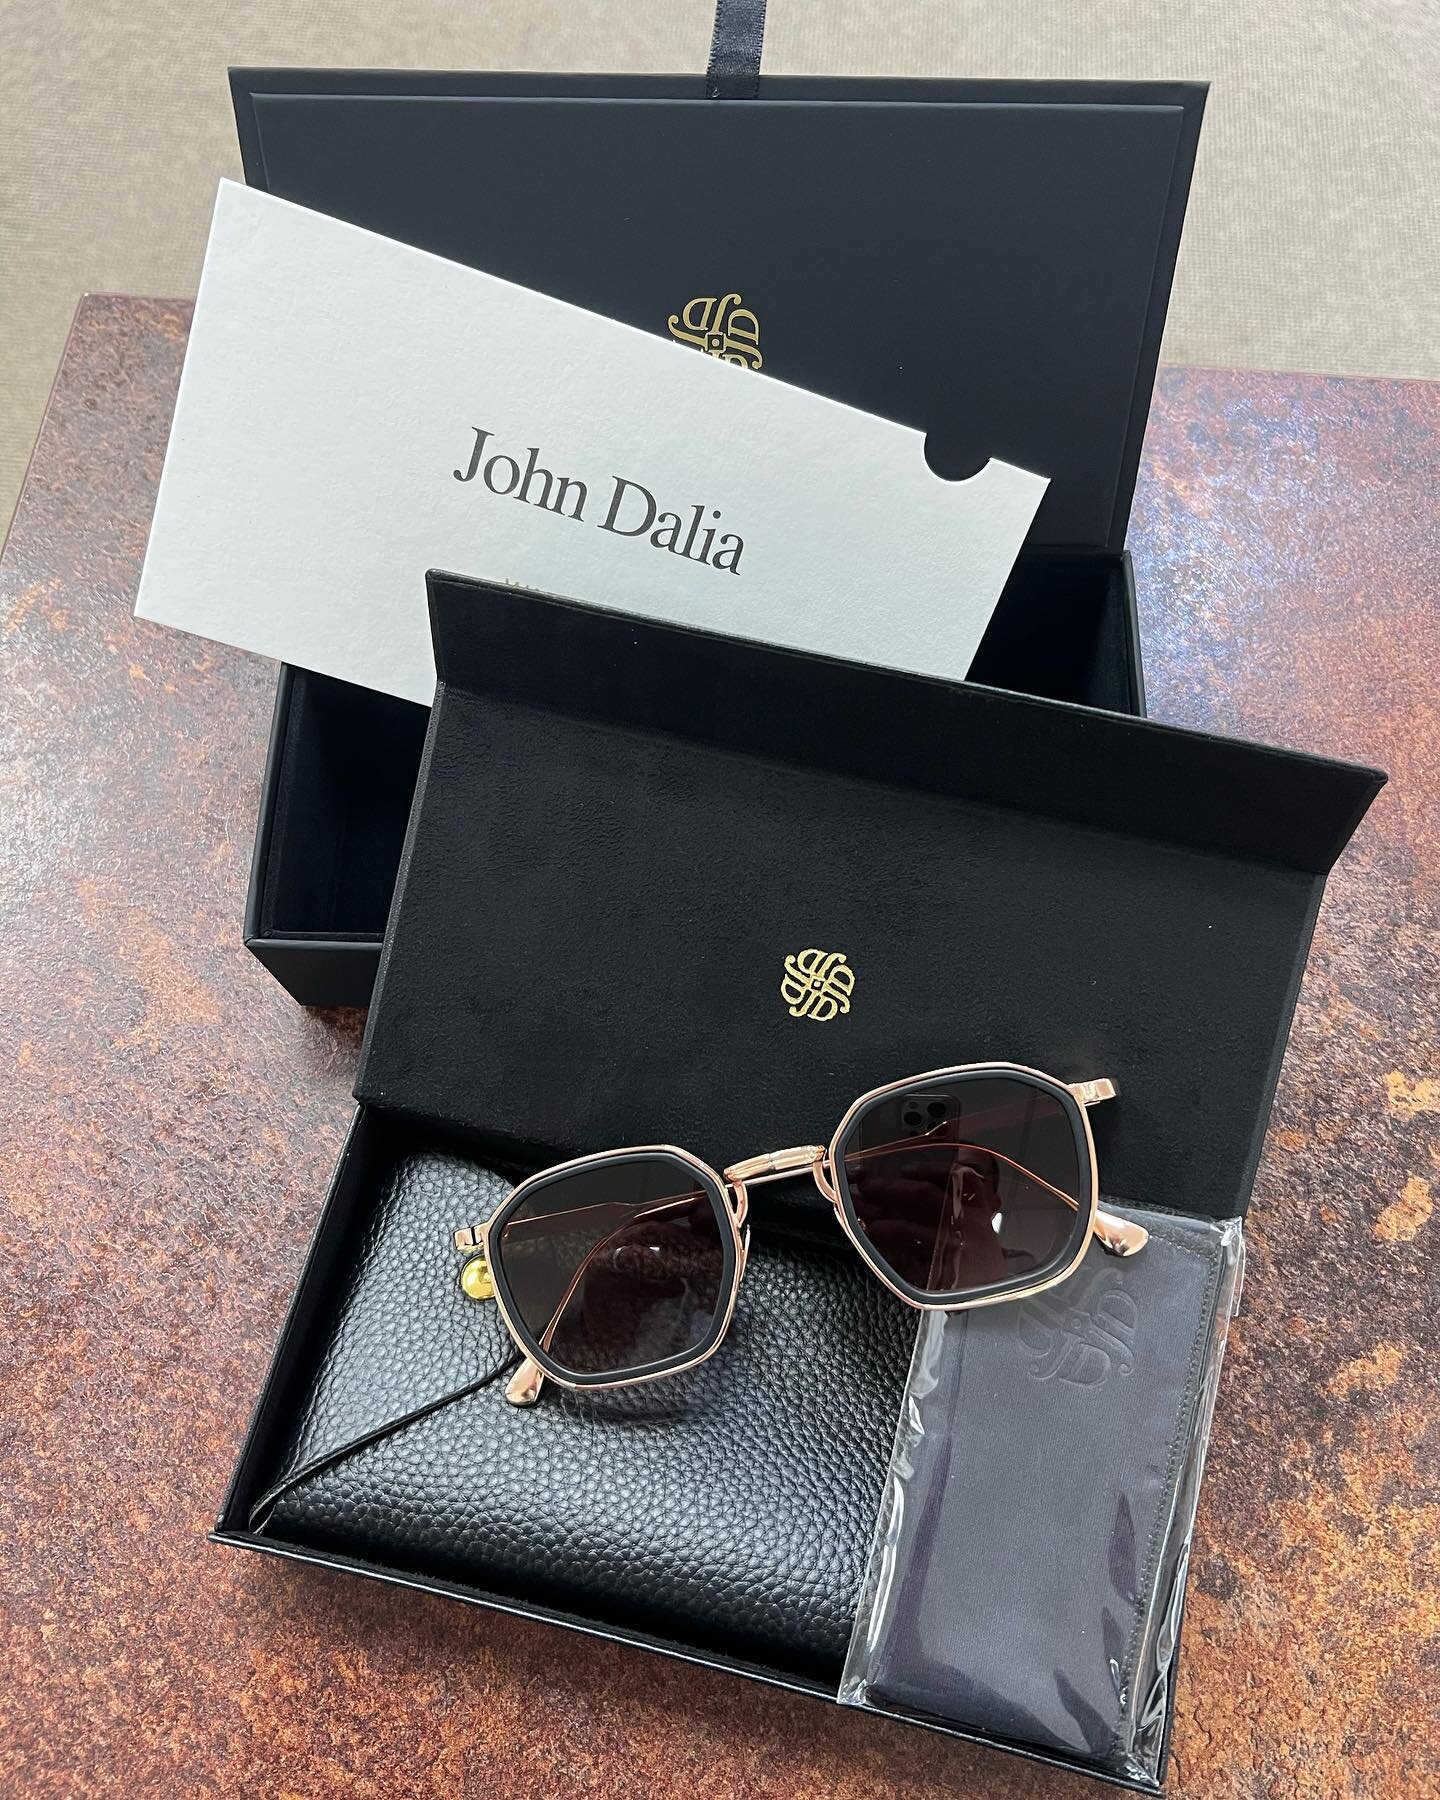 John Dalia has dropped! EDNEY &amp; EDNEY are one of just 5 stockists in the UK of this stunning new luxury collection. 
#johndalia 
#luxurysunglasses
#luxuryeyewear 
#handmadeinfrance 
#independentopticians 
#monsonroad 
#tunbridgewells 
#kent 
#😎?